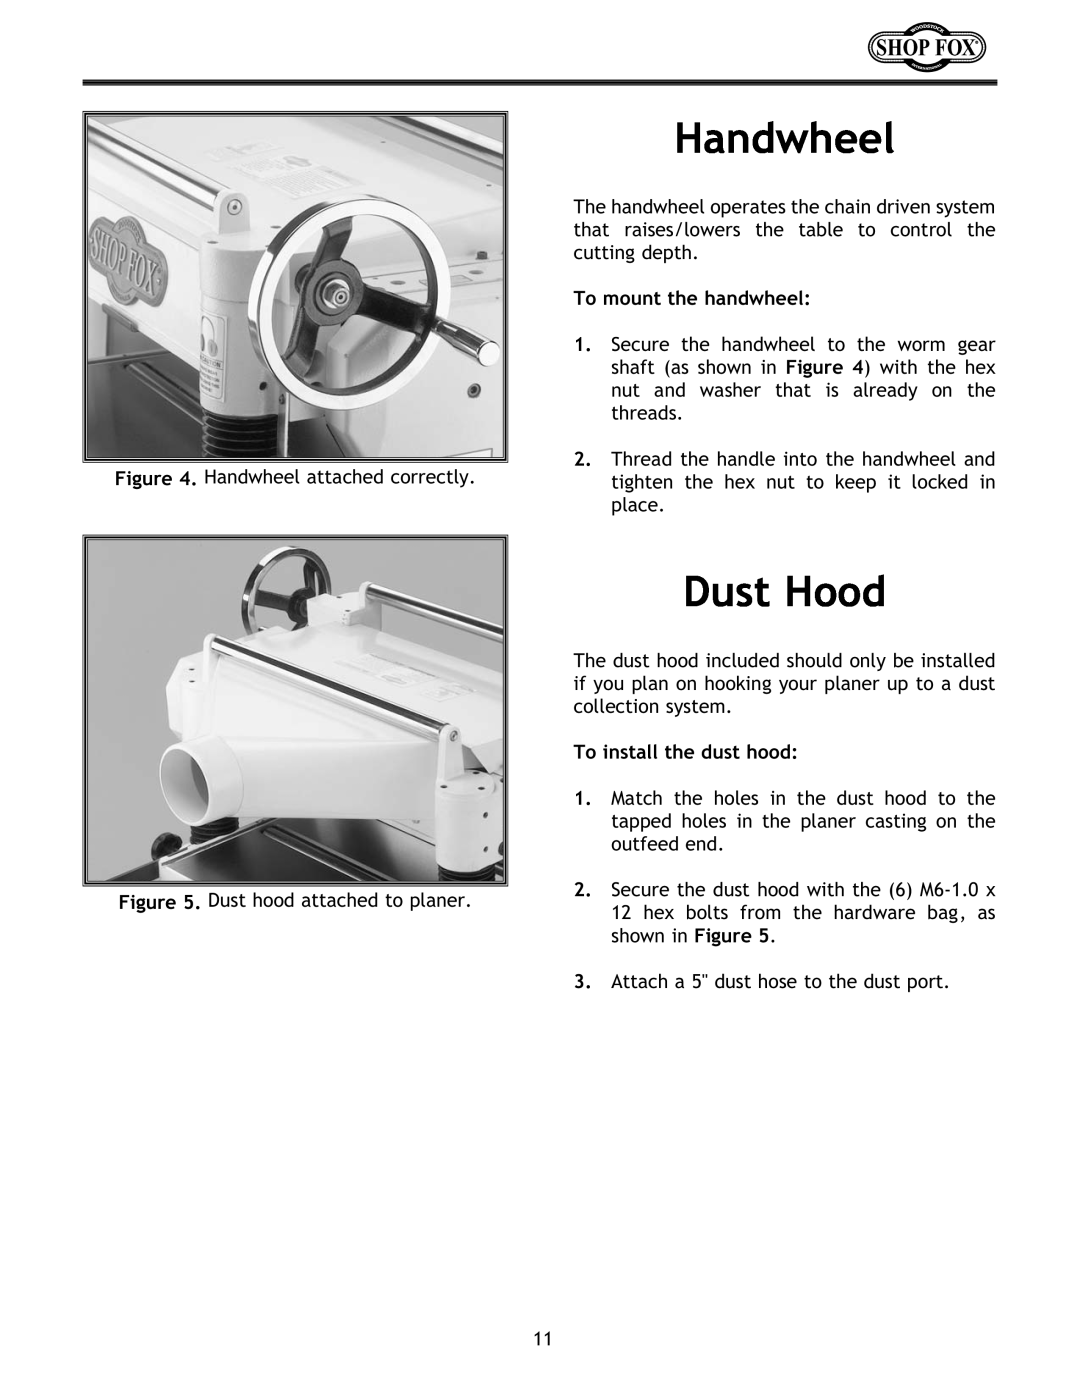 Woodstock W1683 instruction manual Handwheel, Dust Hood, To mount the handwheel, To install the dust hood 